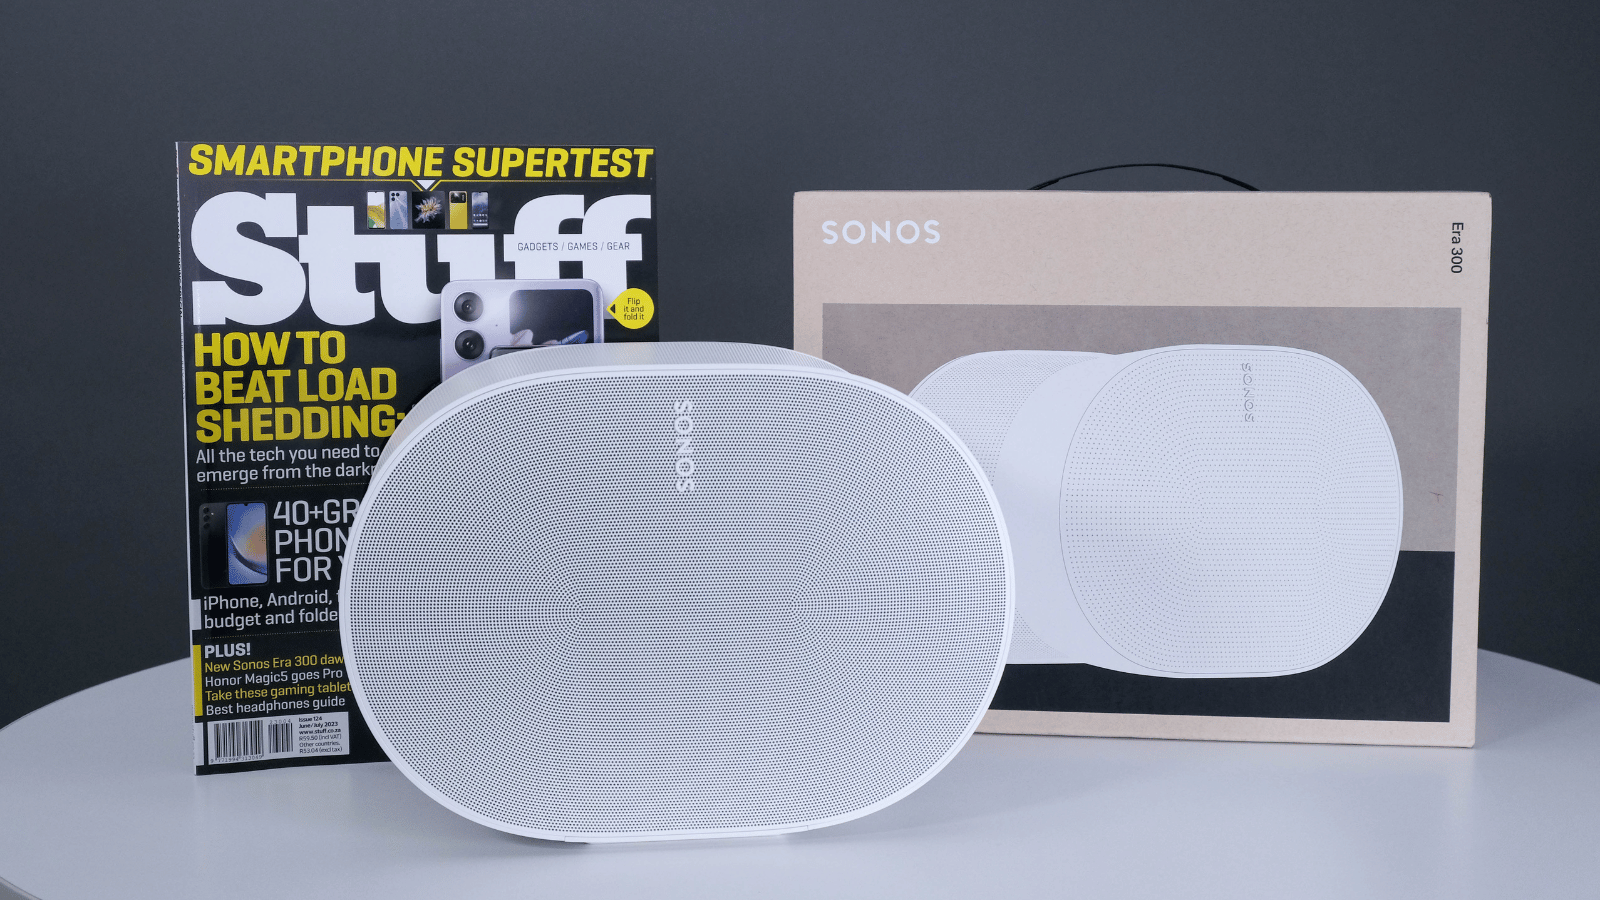 Sonos Era 300 review: A big bet on spatial audio